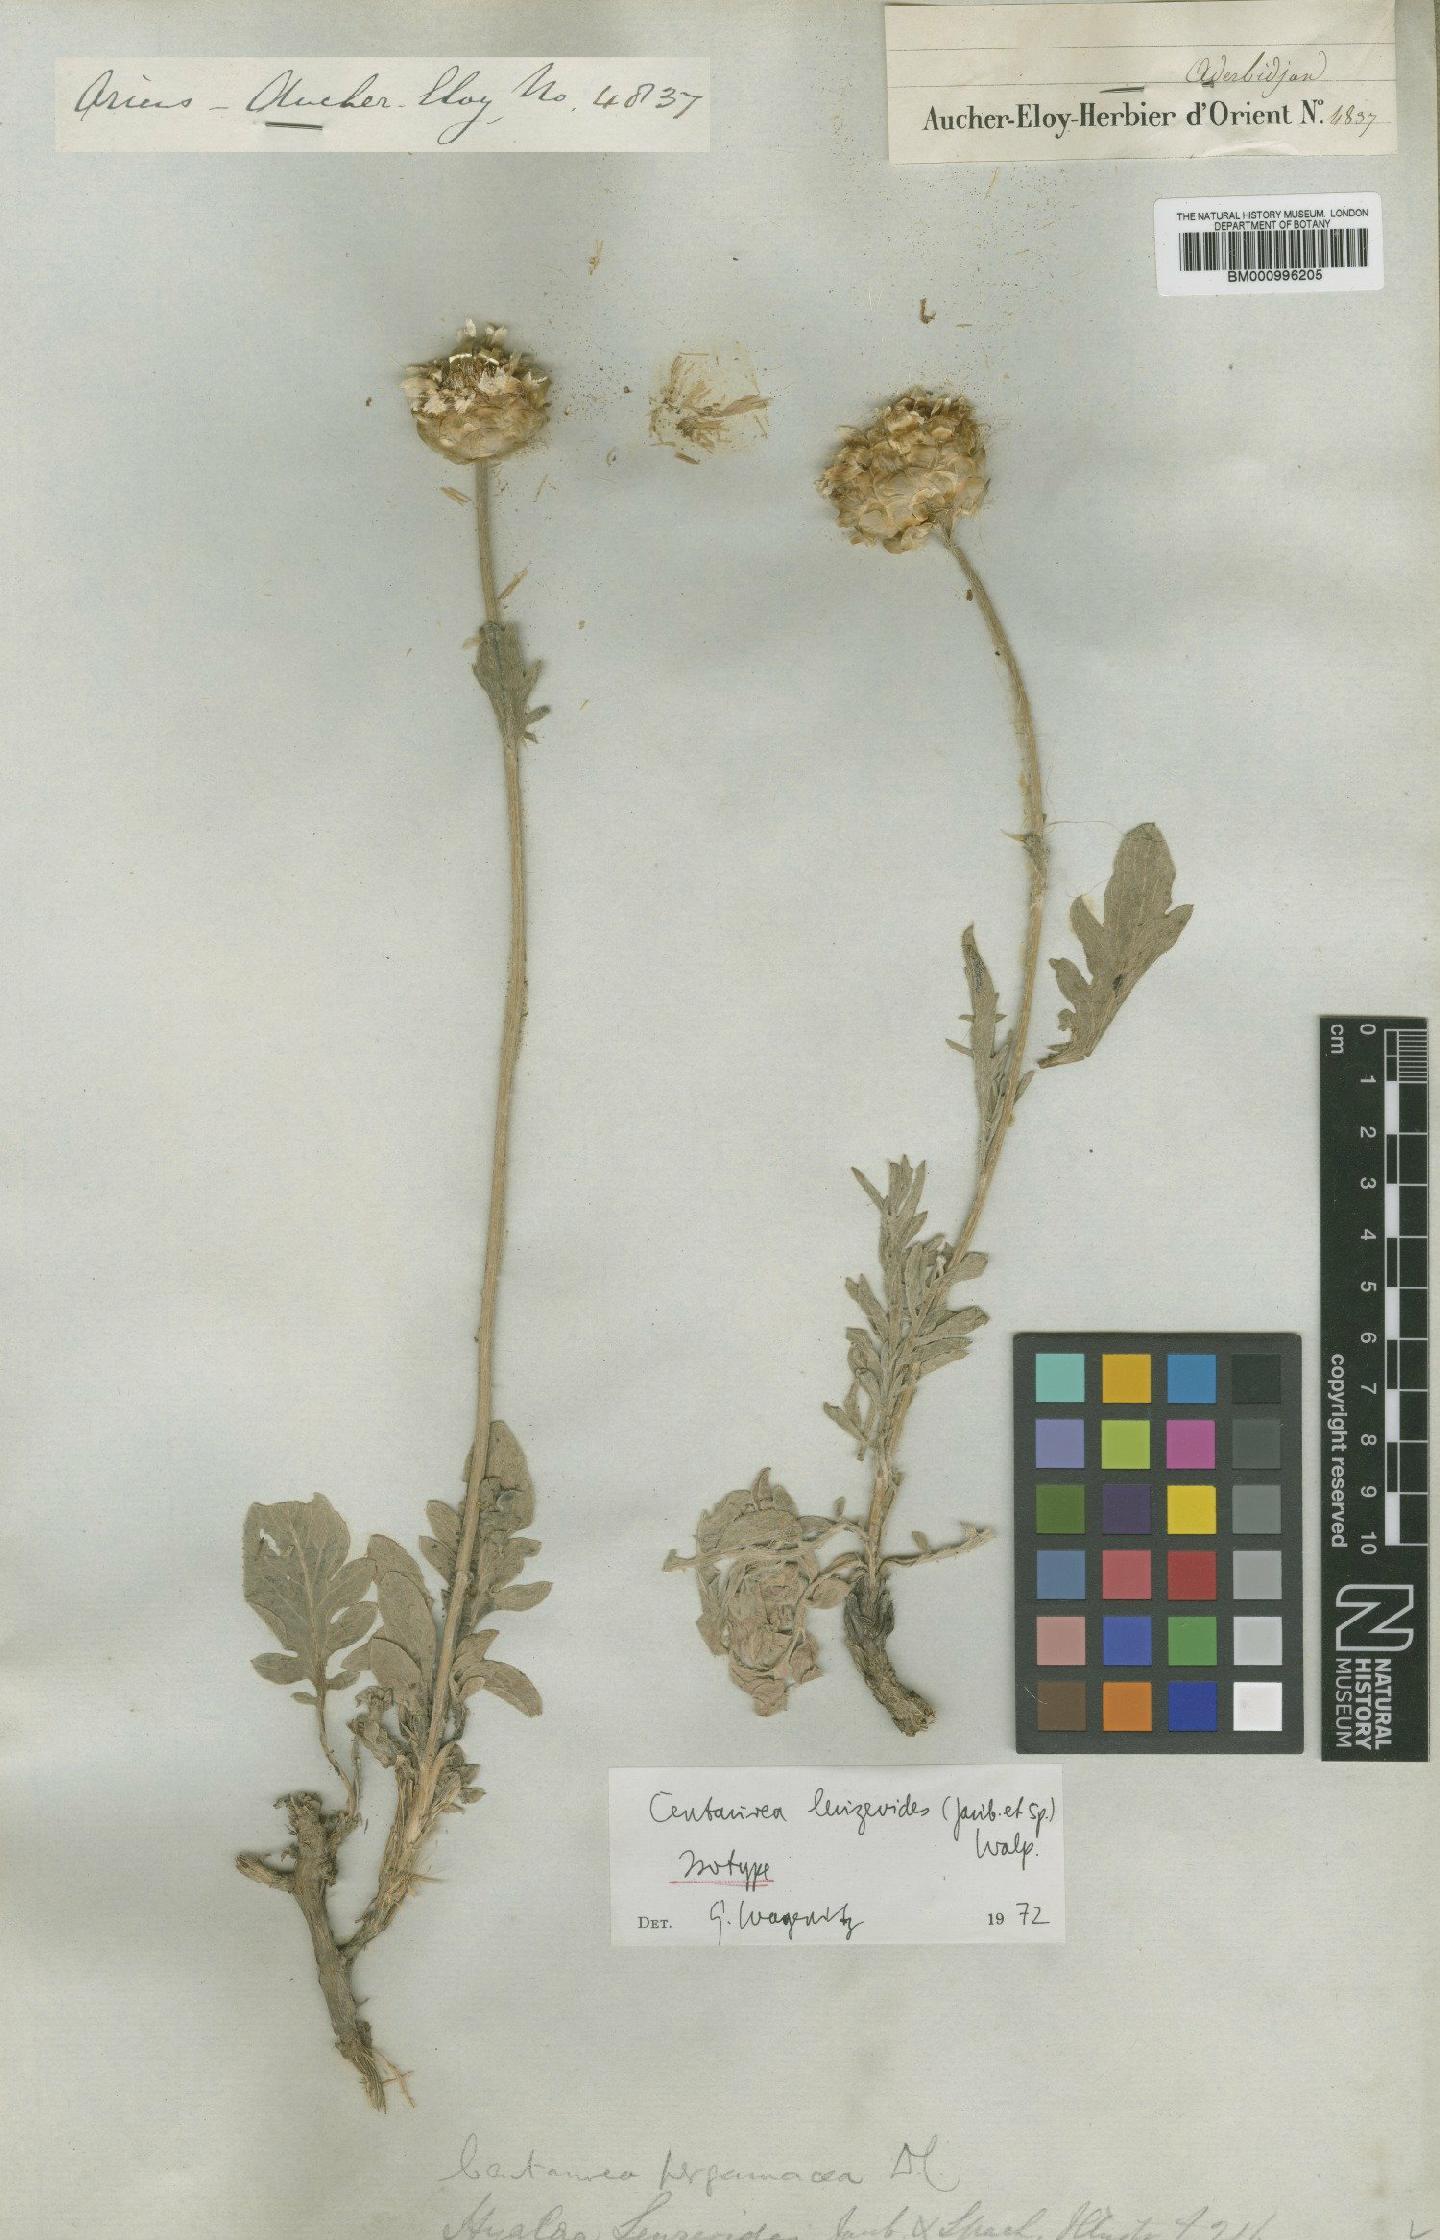 To NHMUK collection (Centaurea leuzeoides Walp.; Isotype; NHMUK:ecatalogue:480132)